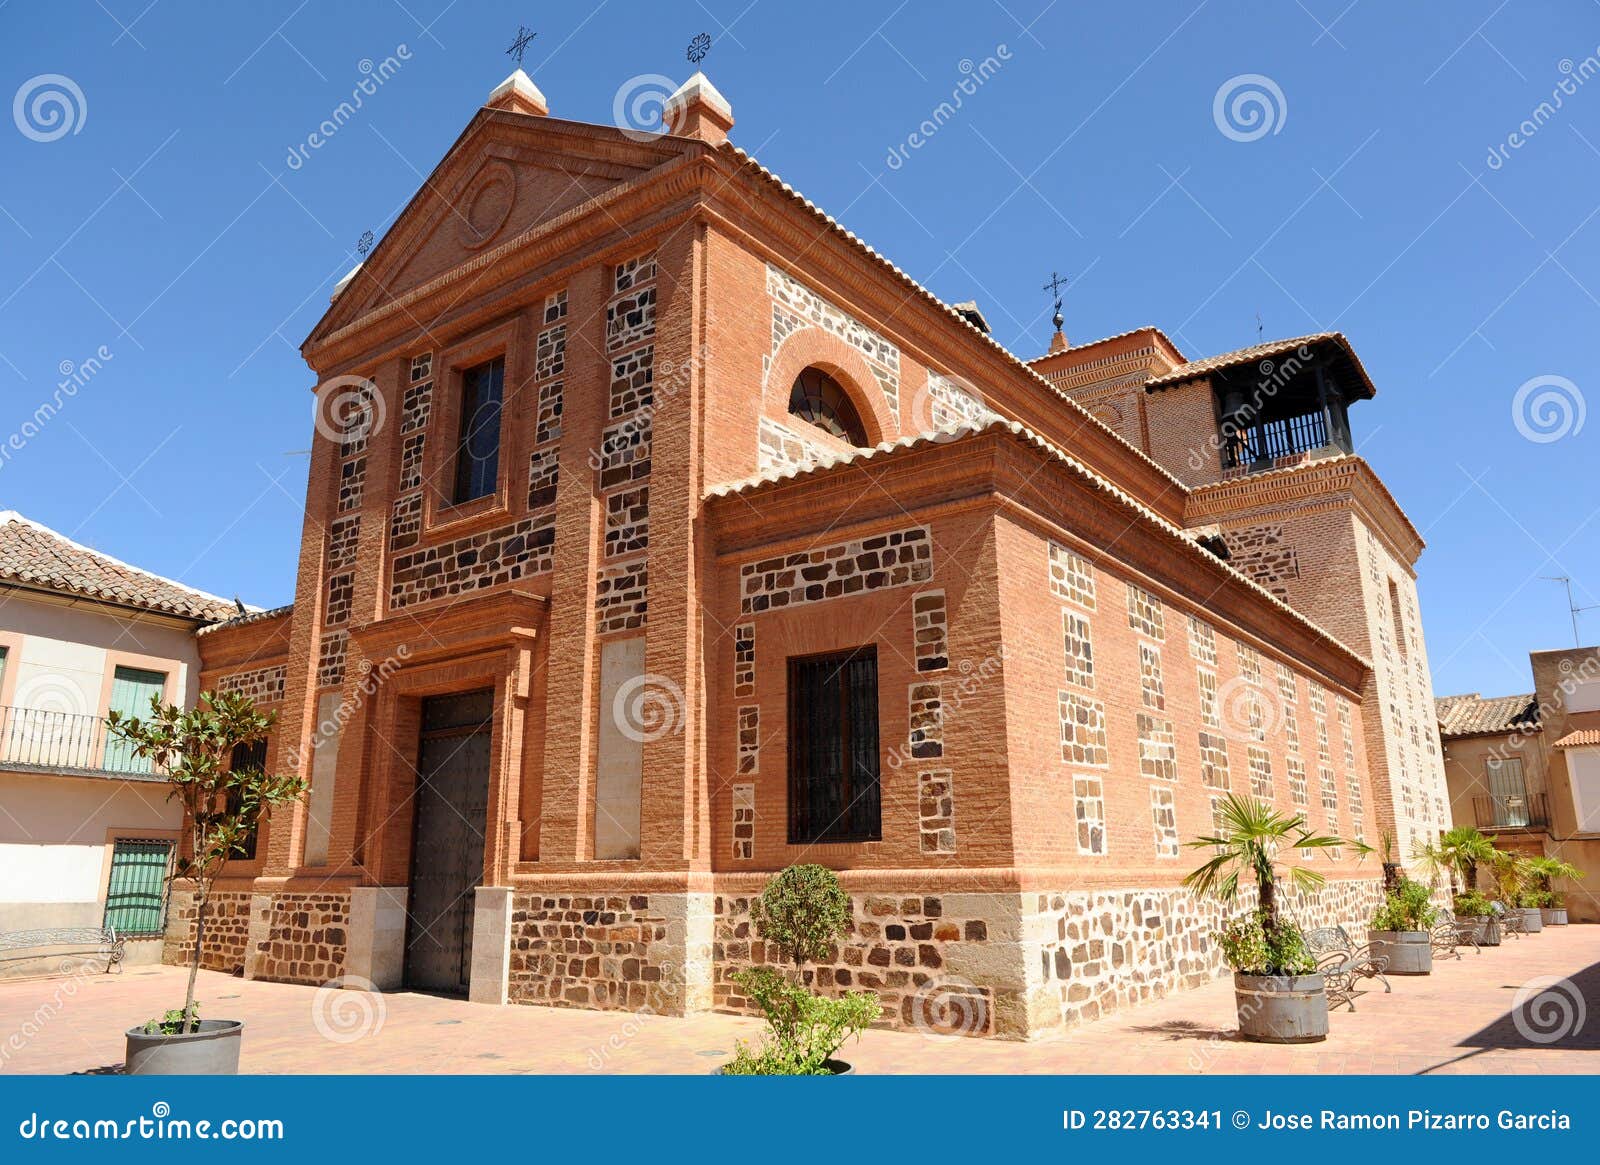 church of the assumption in calzada de calatrava,